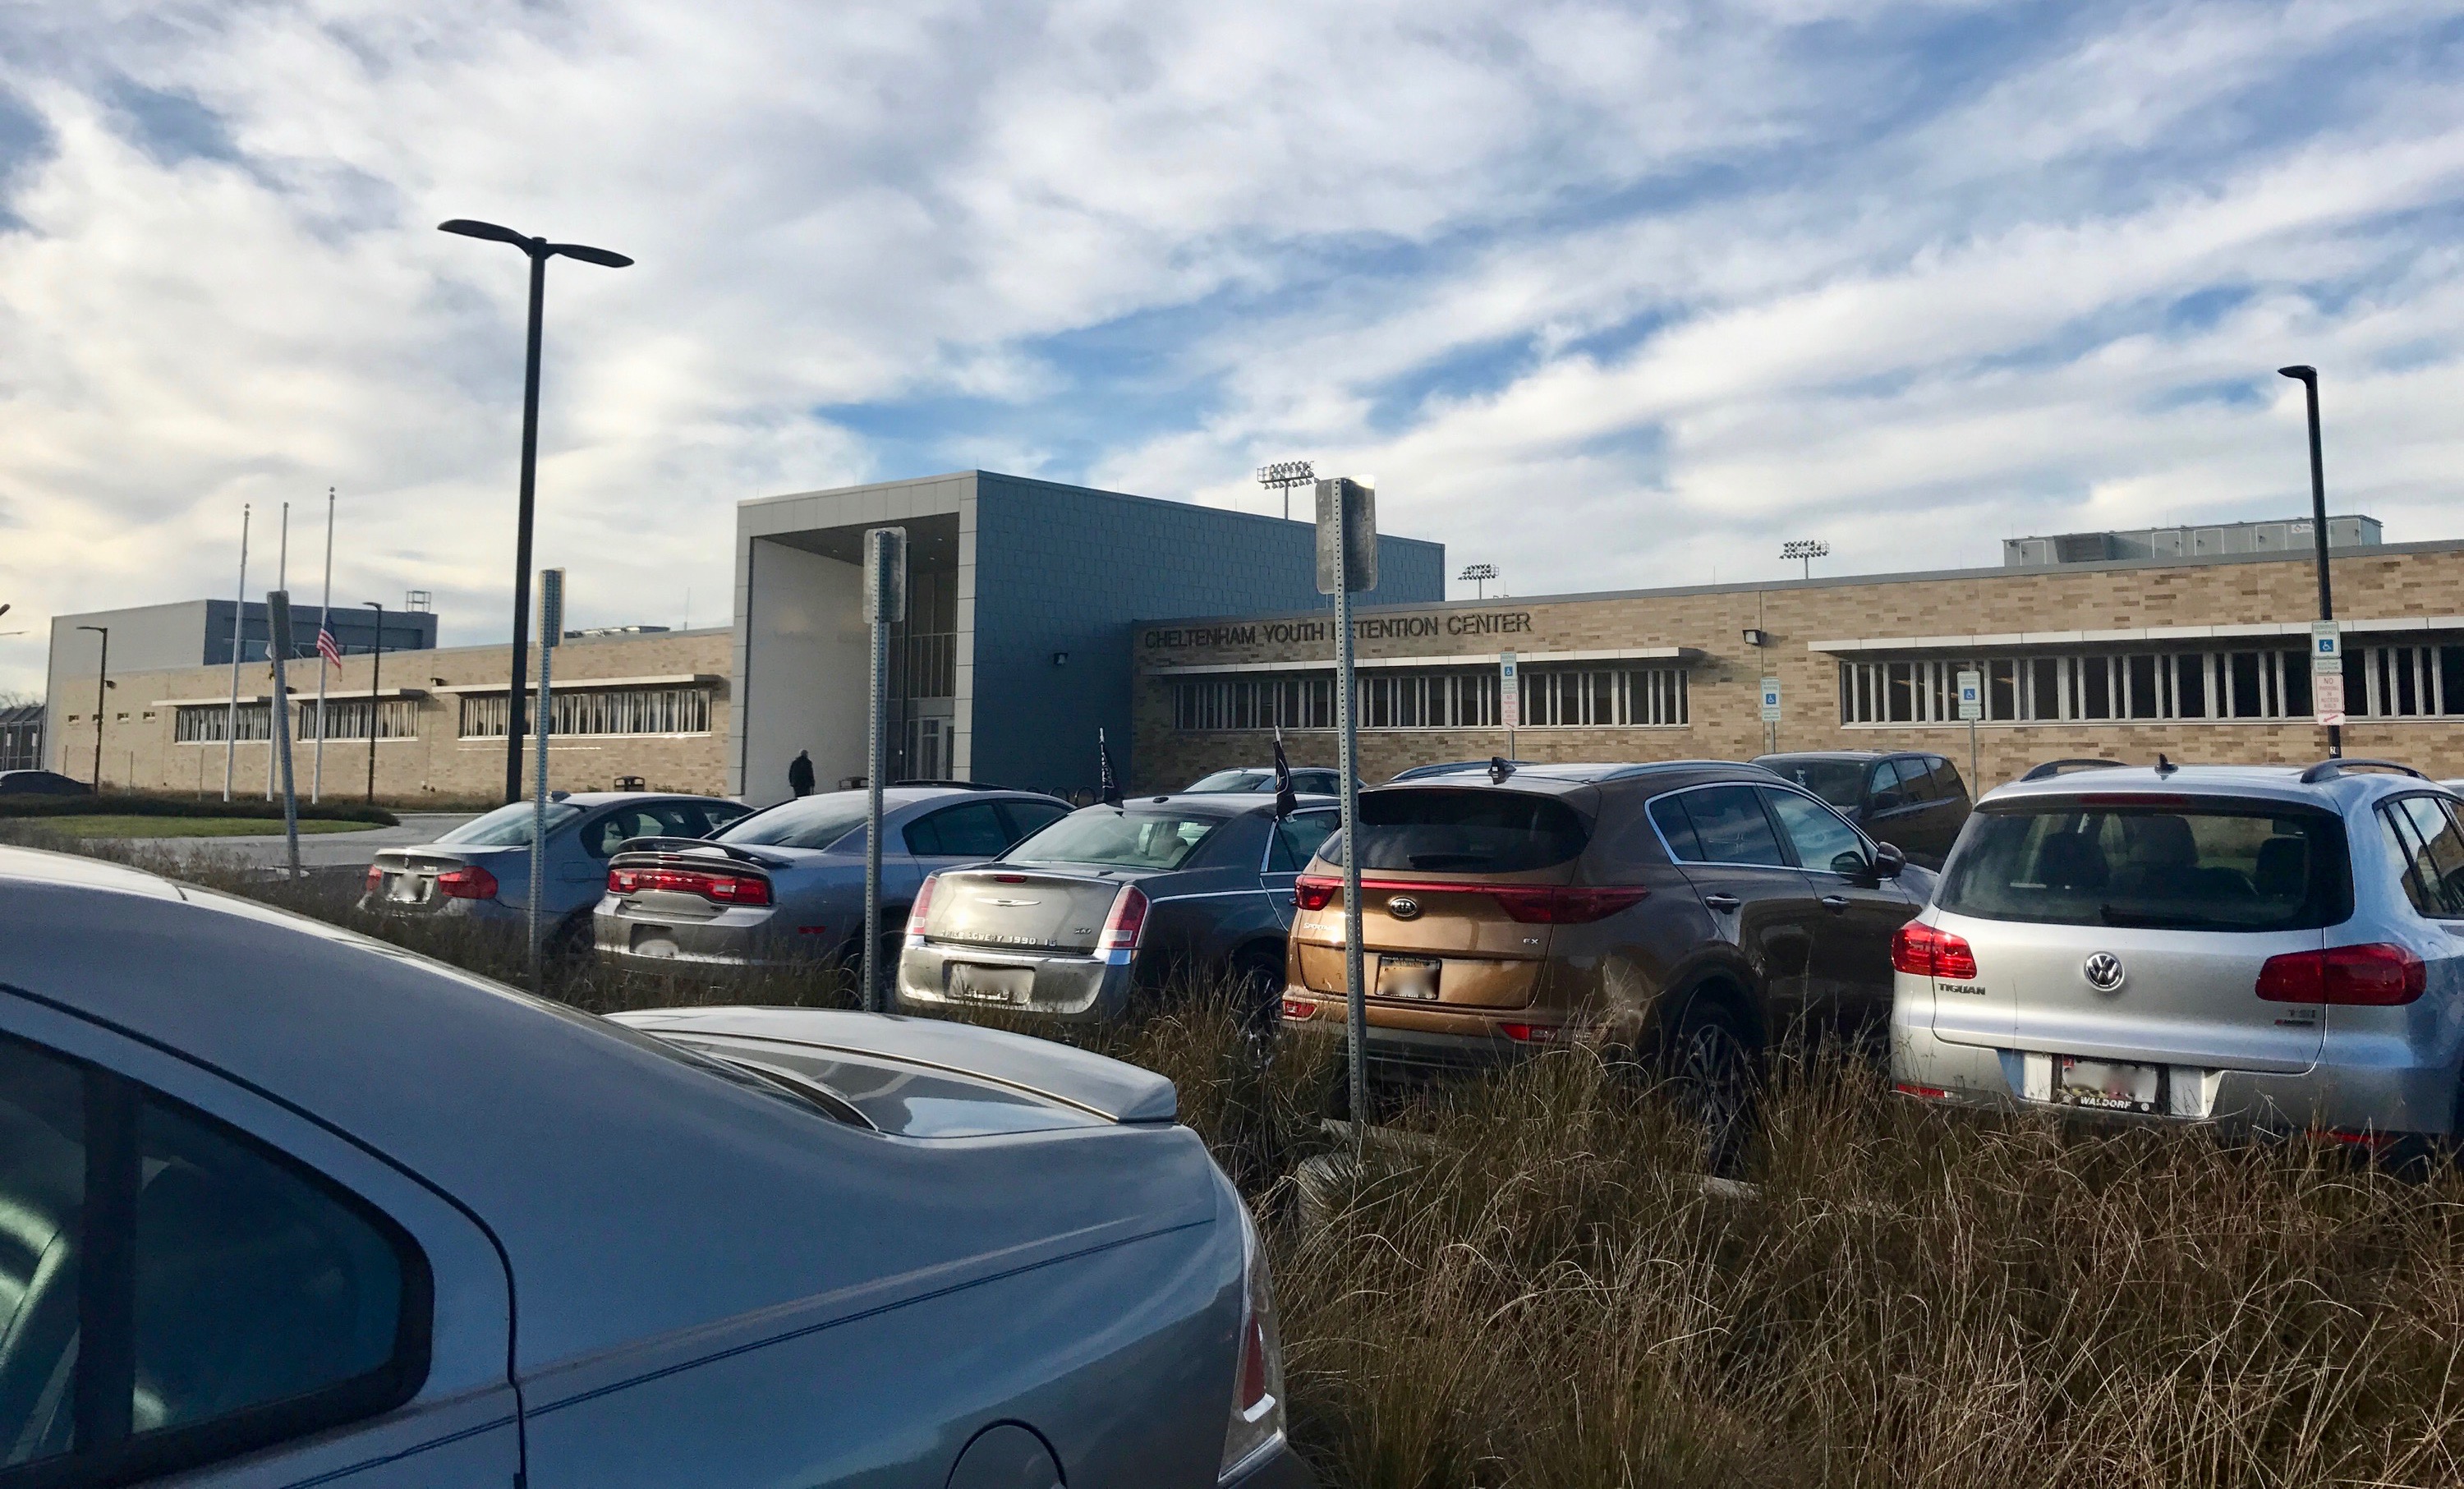 CHELTENHAM, Md. – The Cheltenham Youth Detention Center in Cheltenham, Maryland, on Nov. 17, 2017, has the capacity to fill 72 beds total. (Jess Feldman/Capital News Service).